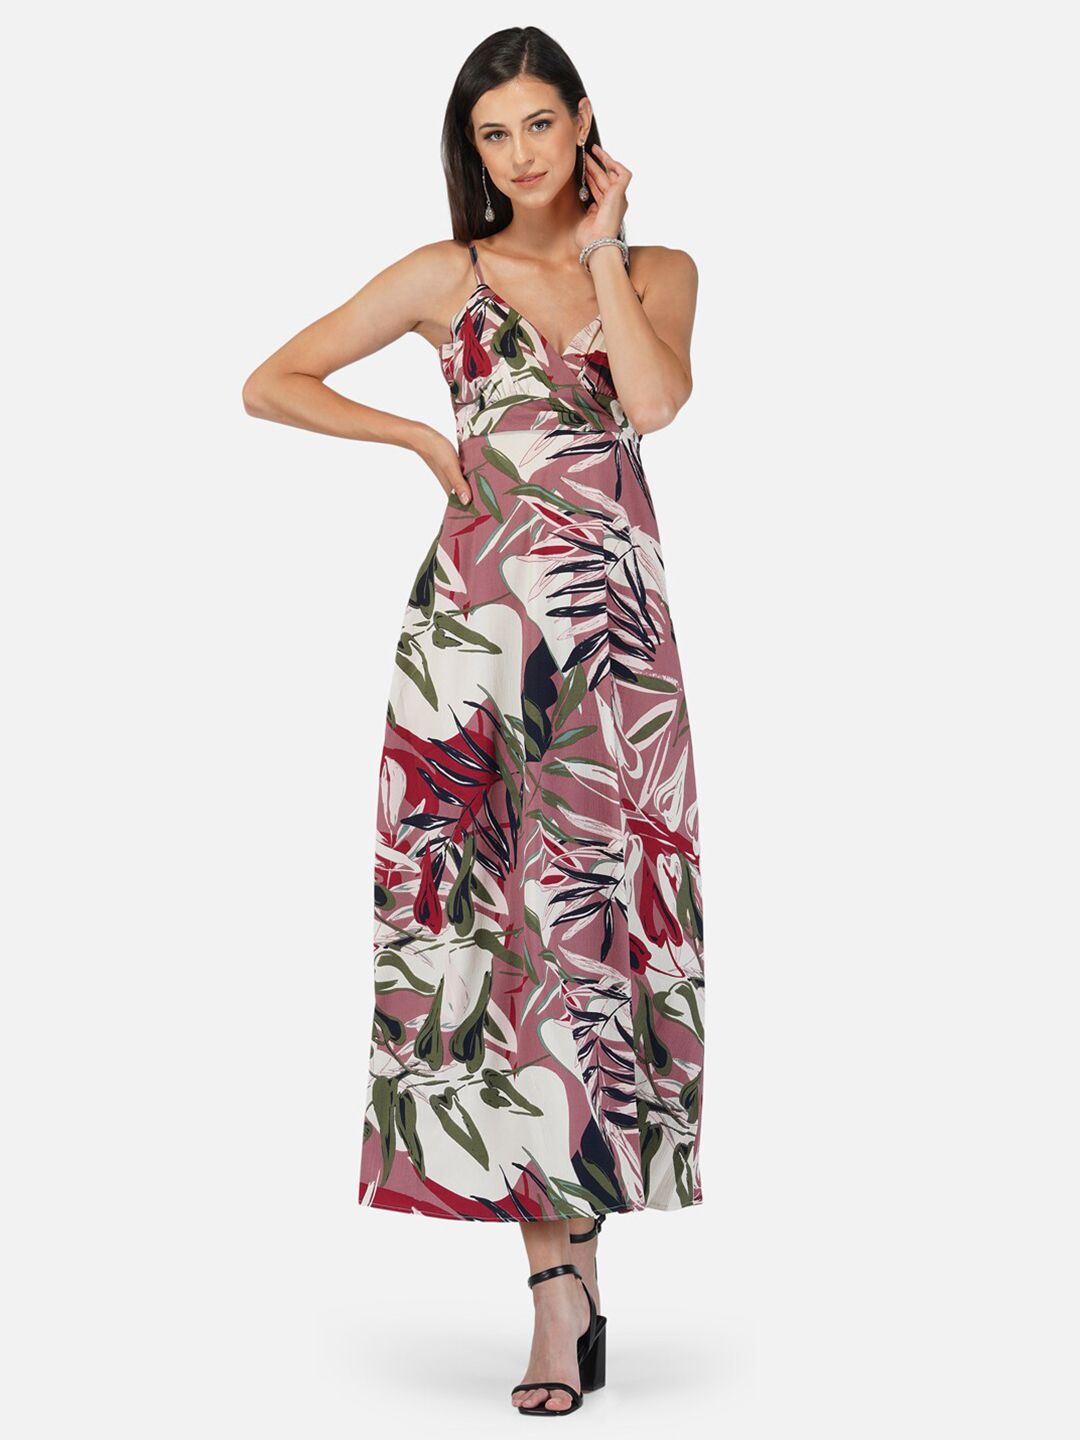 BELAVINE Tropical Print Maxi Dress Price in India